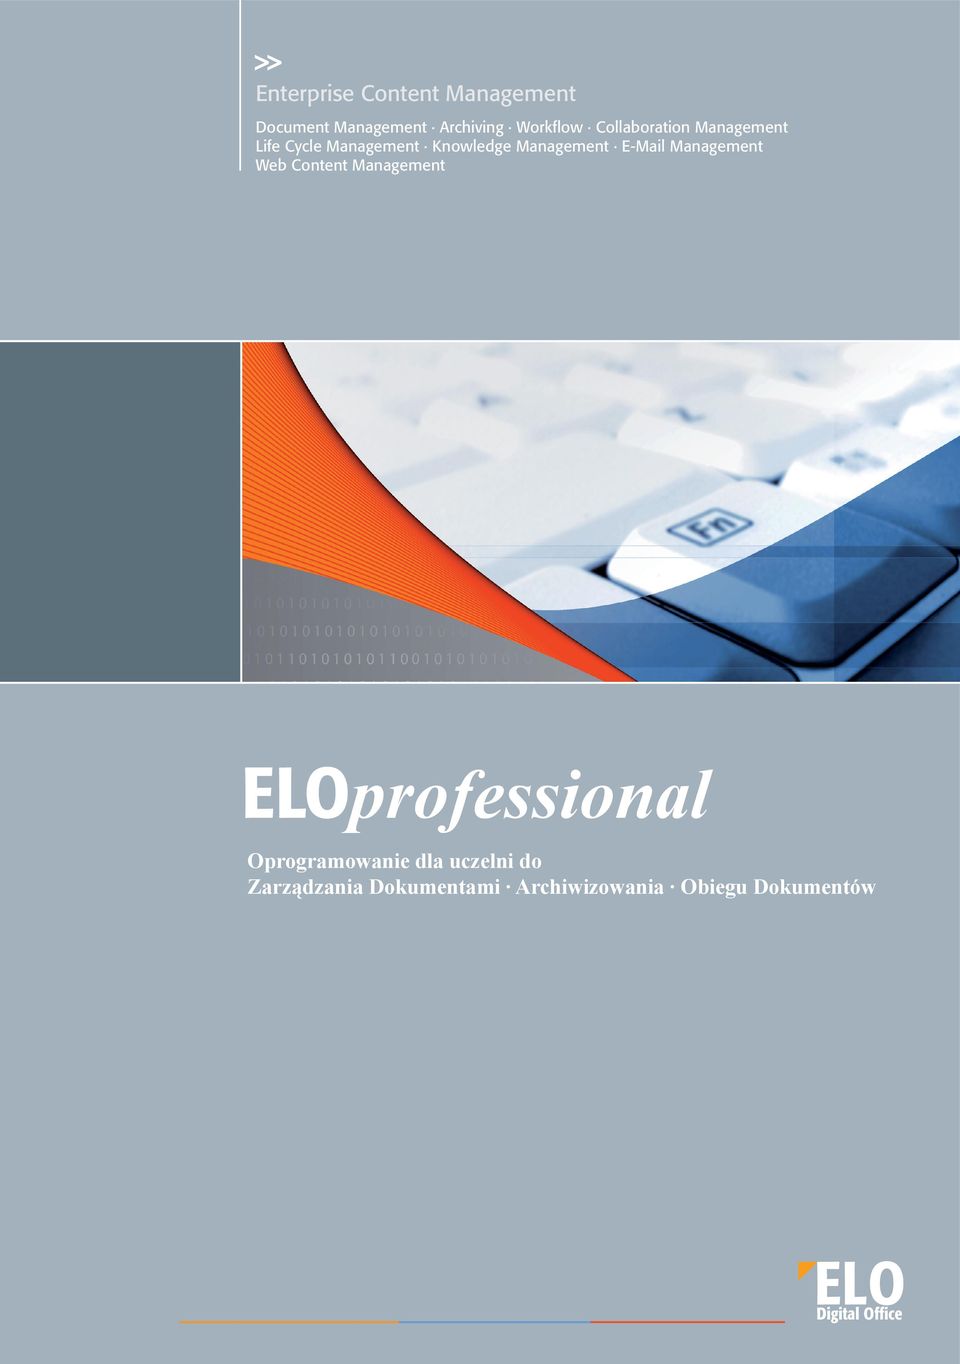 E-Mail Management Web Content Management ELOprofessional